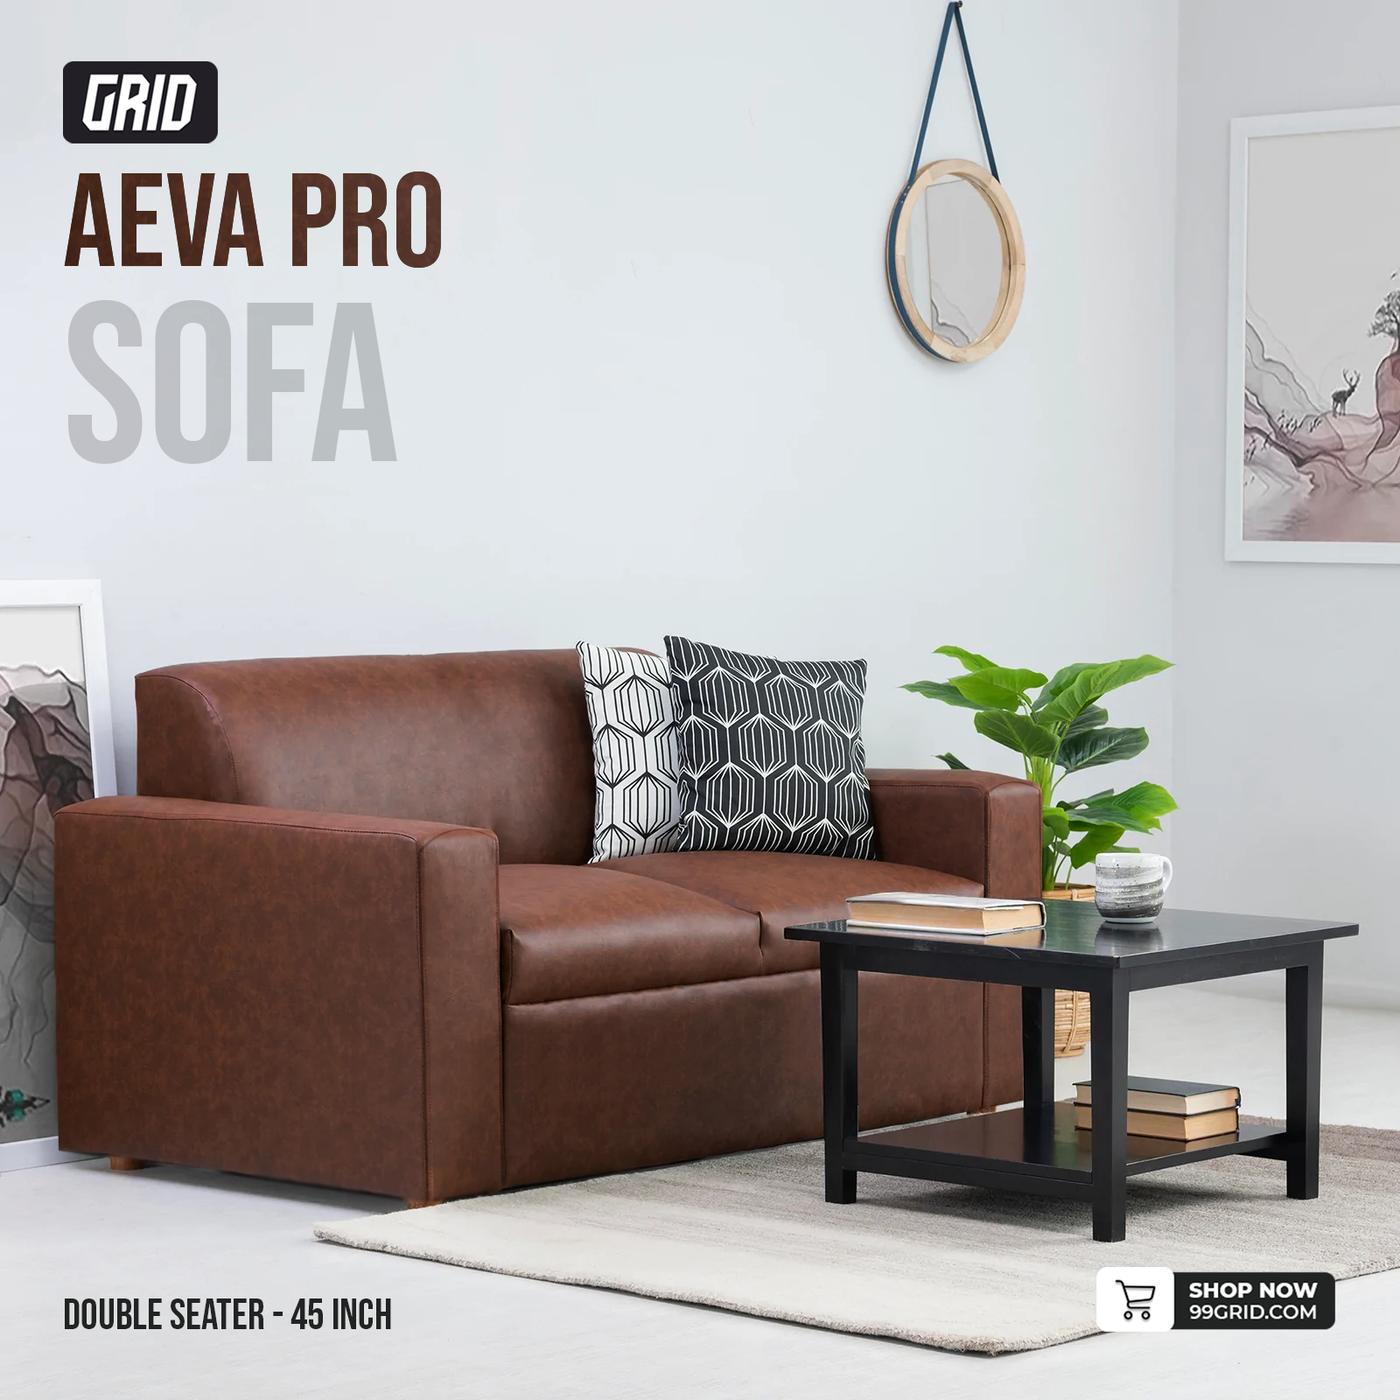 GRID Aeva Pro Sofa